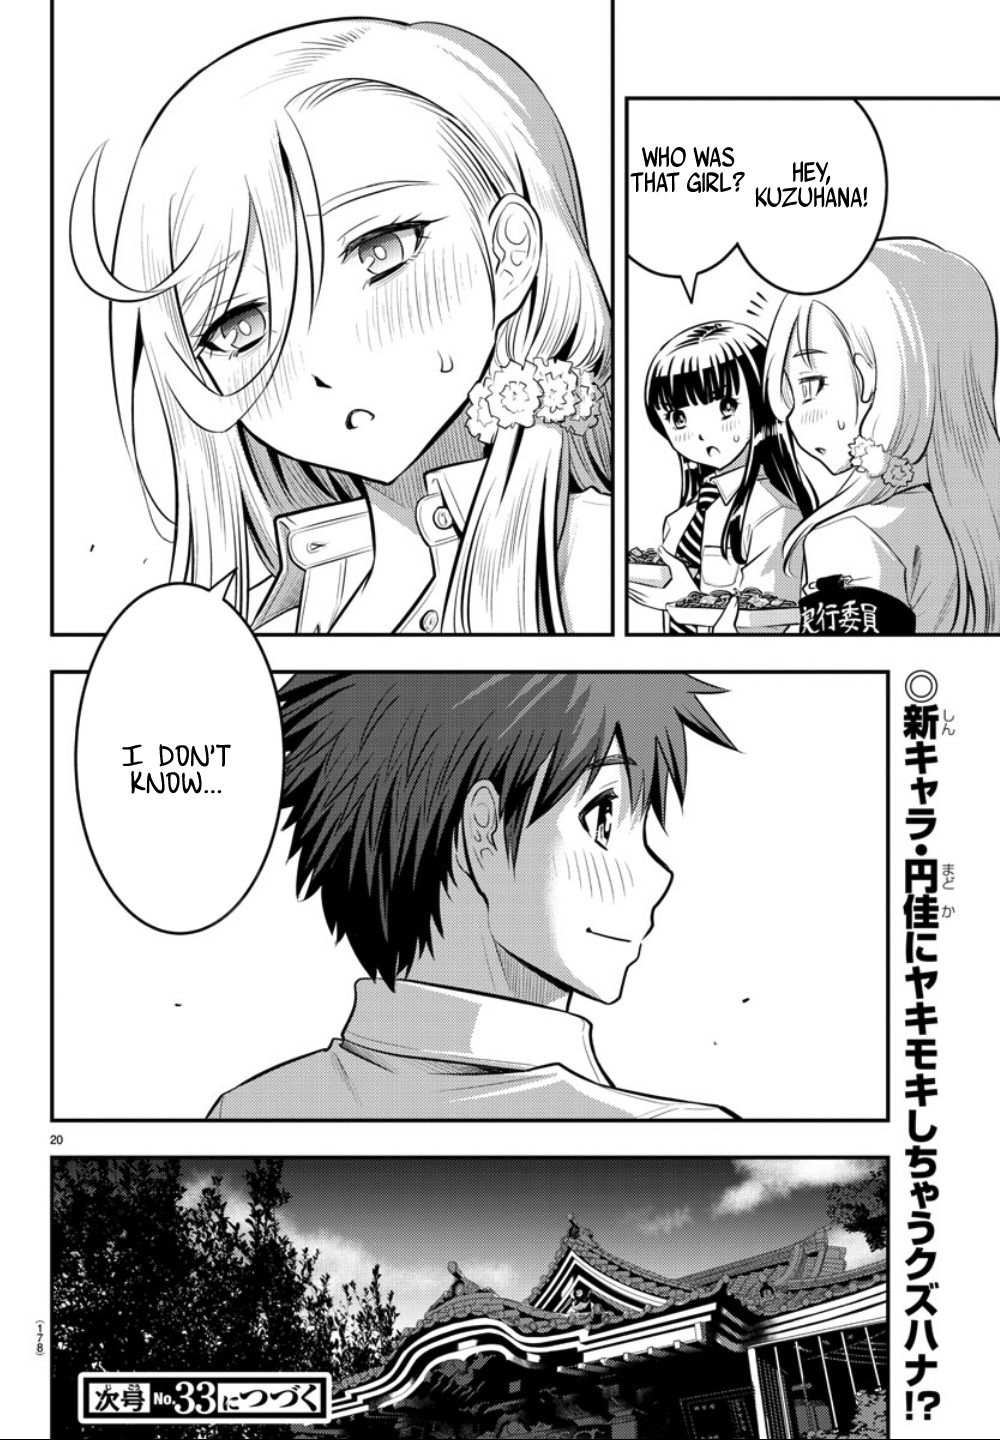 Yankee JK KuzuHana-chan chapter 16 page 21